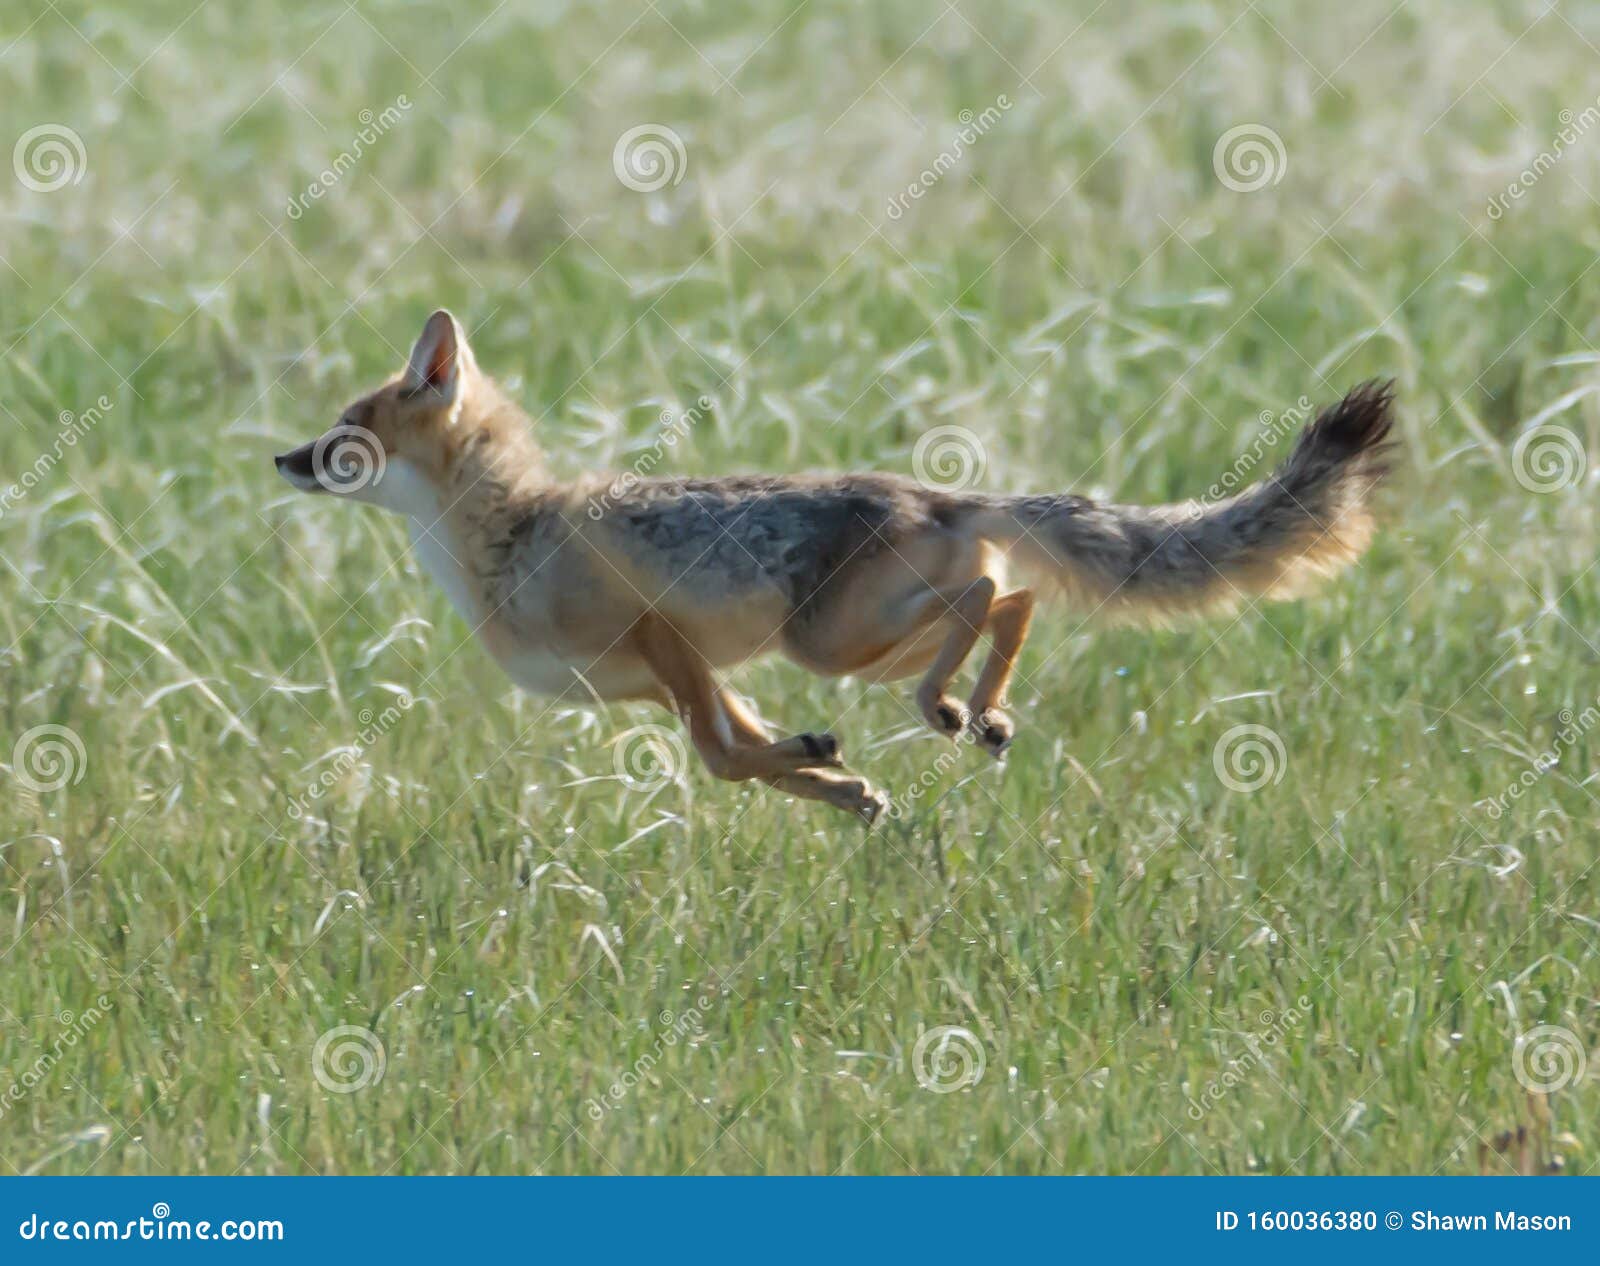 swift fox vixen showing her true speed